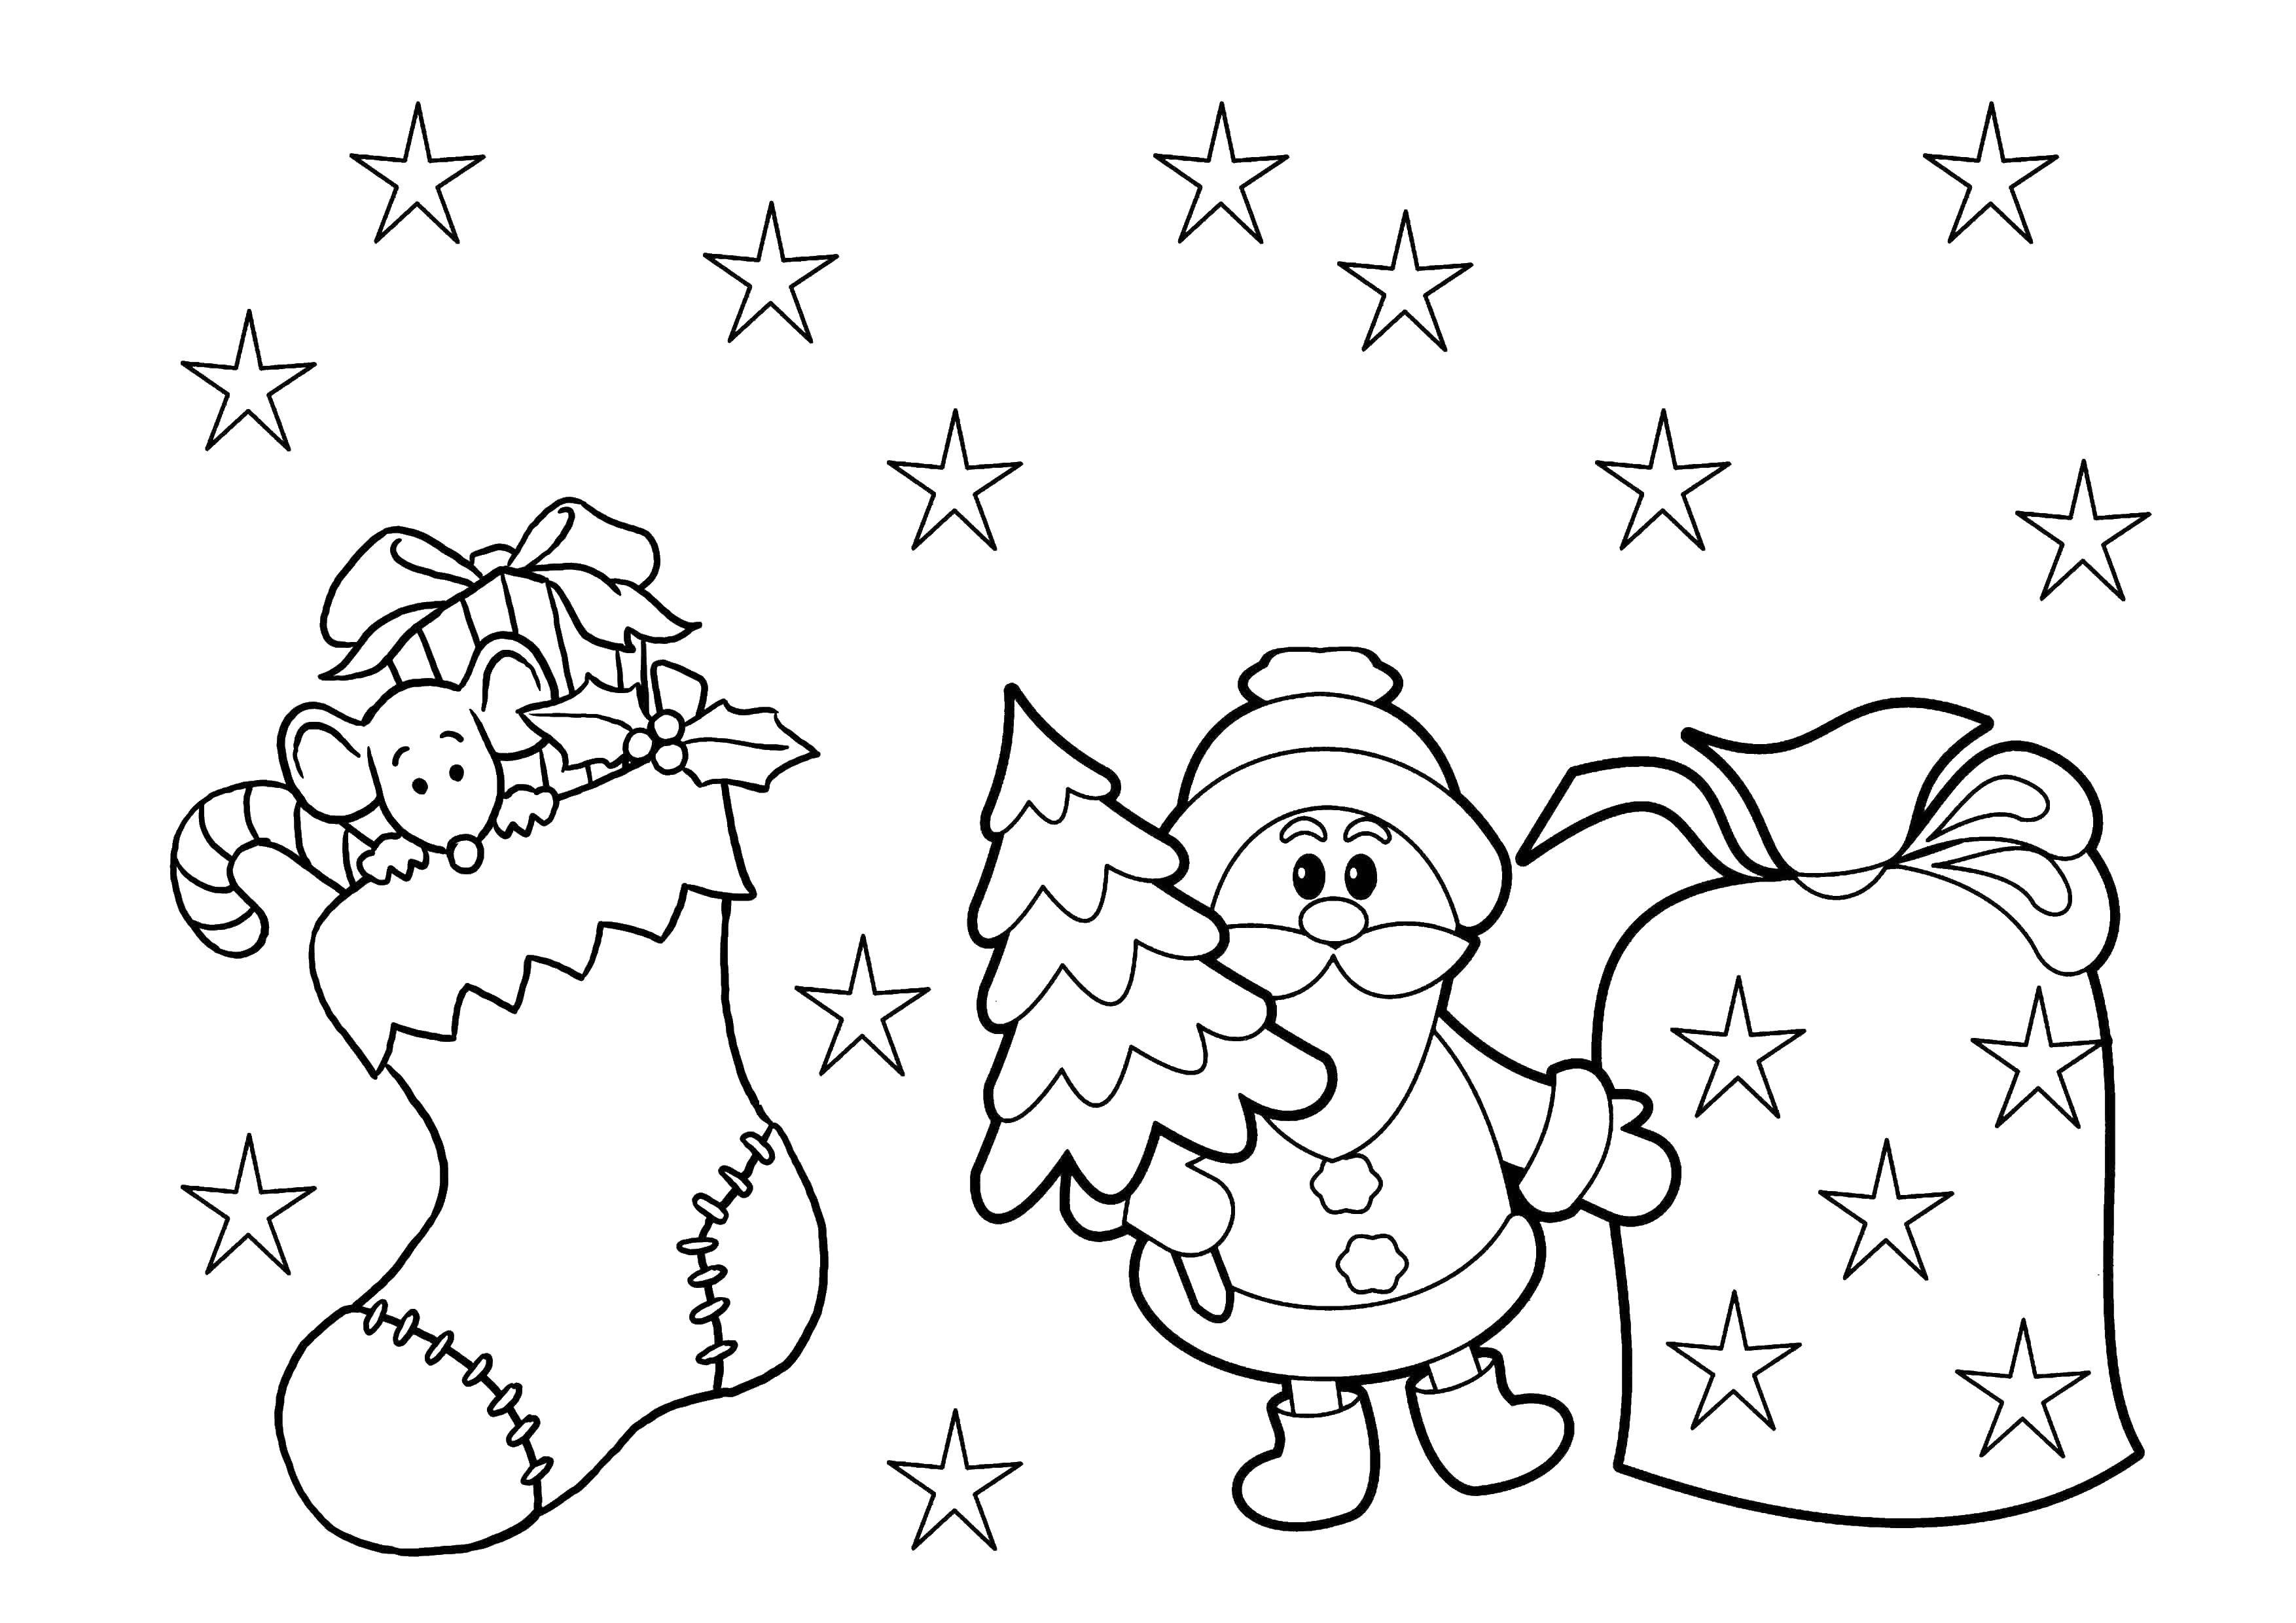 Название: Раскраска Дед мороз и мешок подарков. Категория: рождество. Теги: дед мороз, мешок, игрушки.